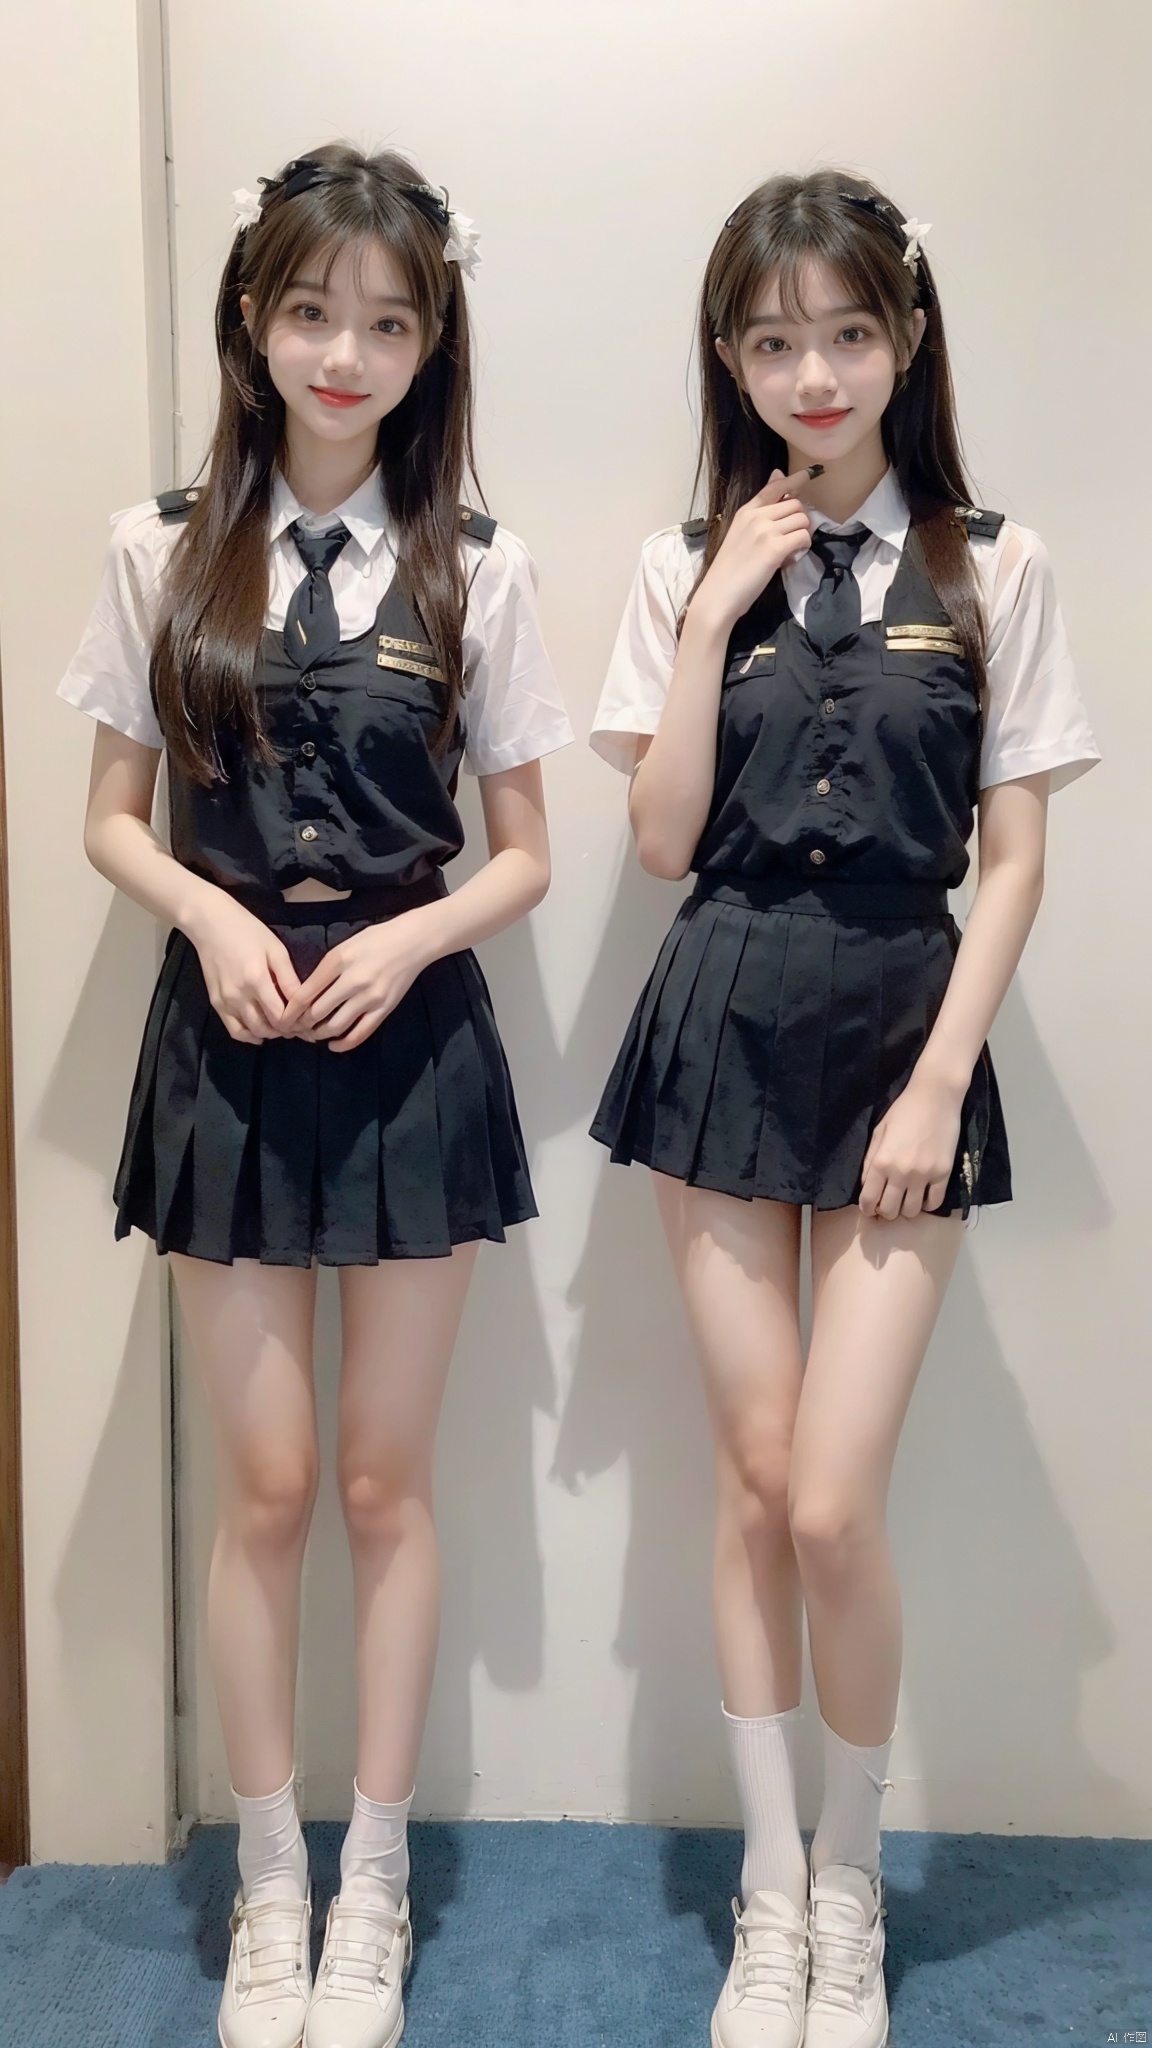  (2_girls:1.9),twins,kind smile,sexy,standing,full body,police officer,Transparent white gauze short skirt, moyou, wangyushan